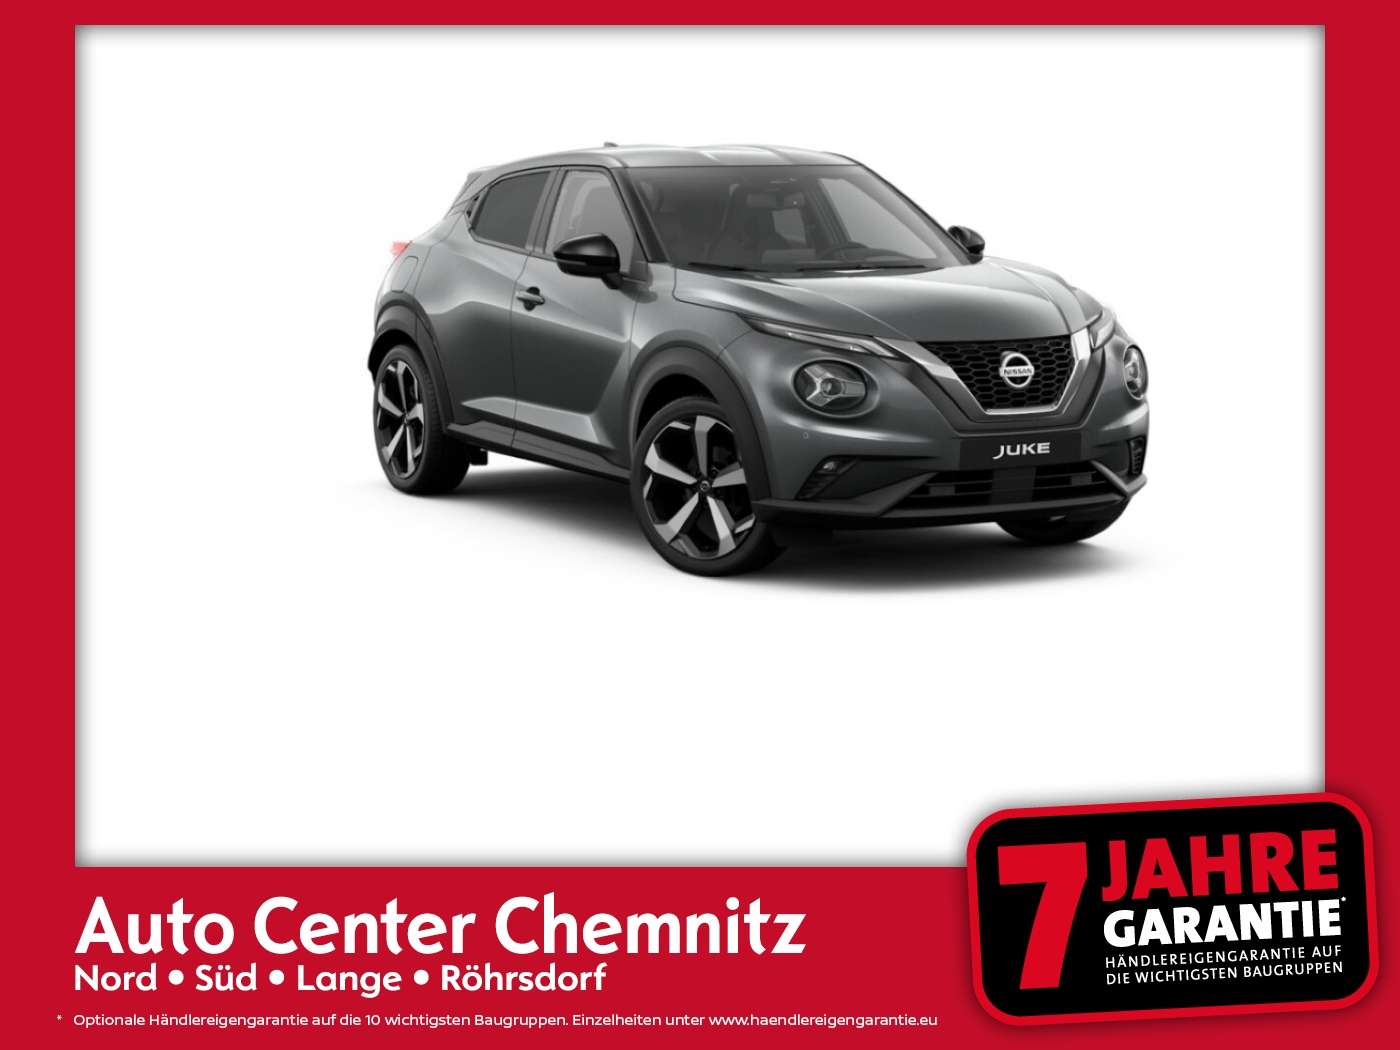 Nissan Juke Off-Road/Pick-up in Black new in Chemnitz for € 24,740.-